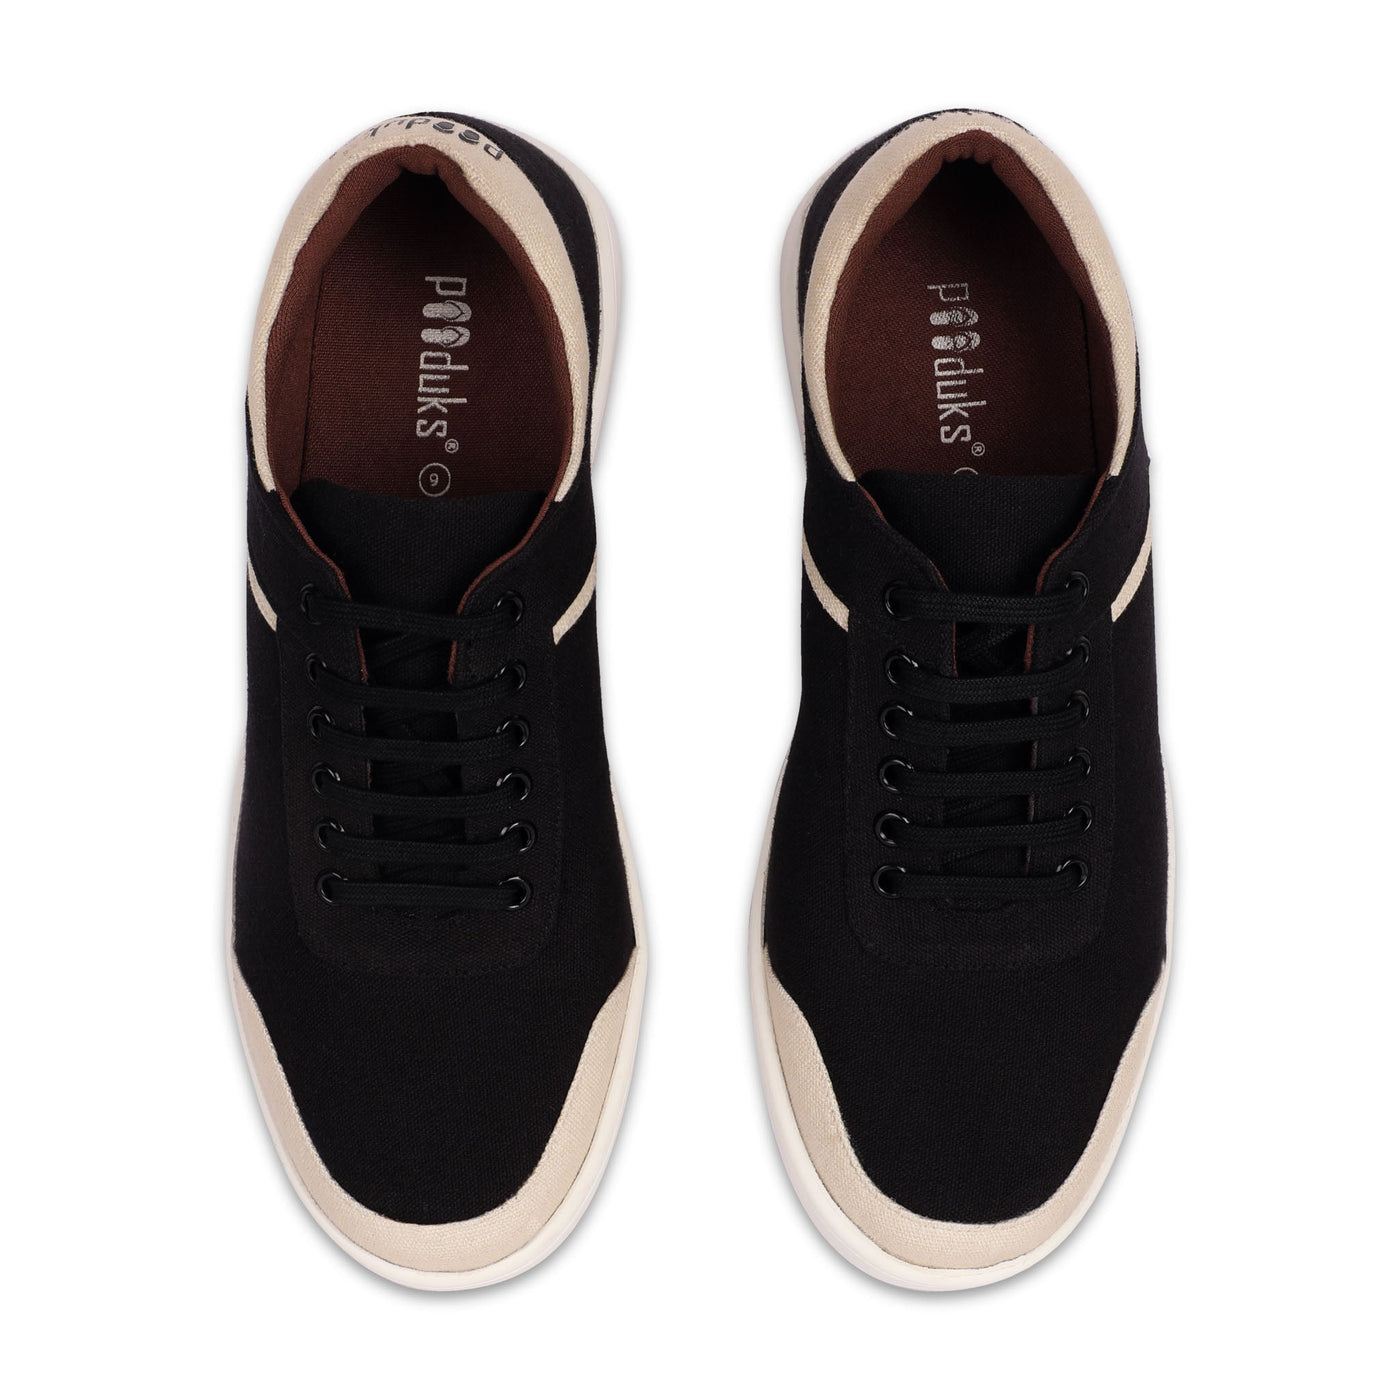 Dan Eco-Sole Black and Beige Sneakers (Unisex)